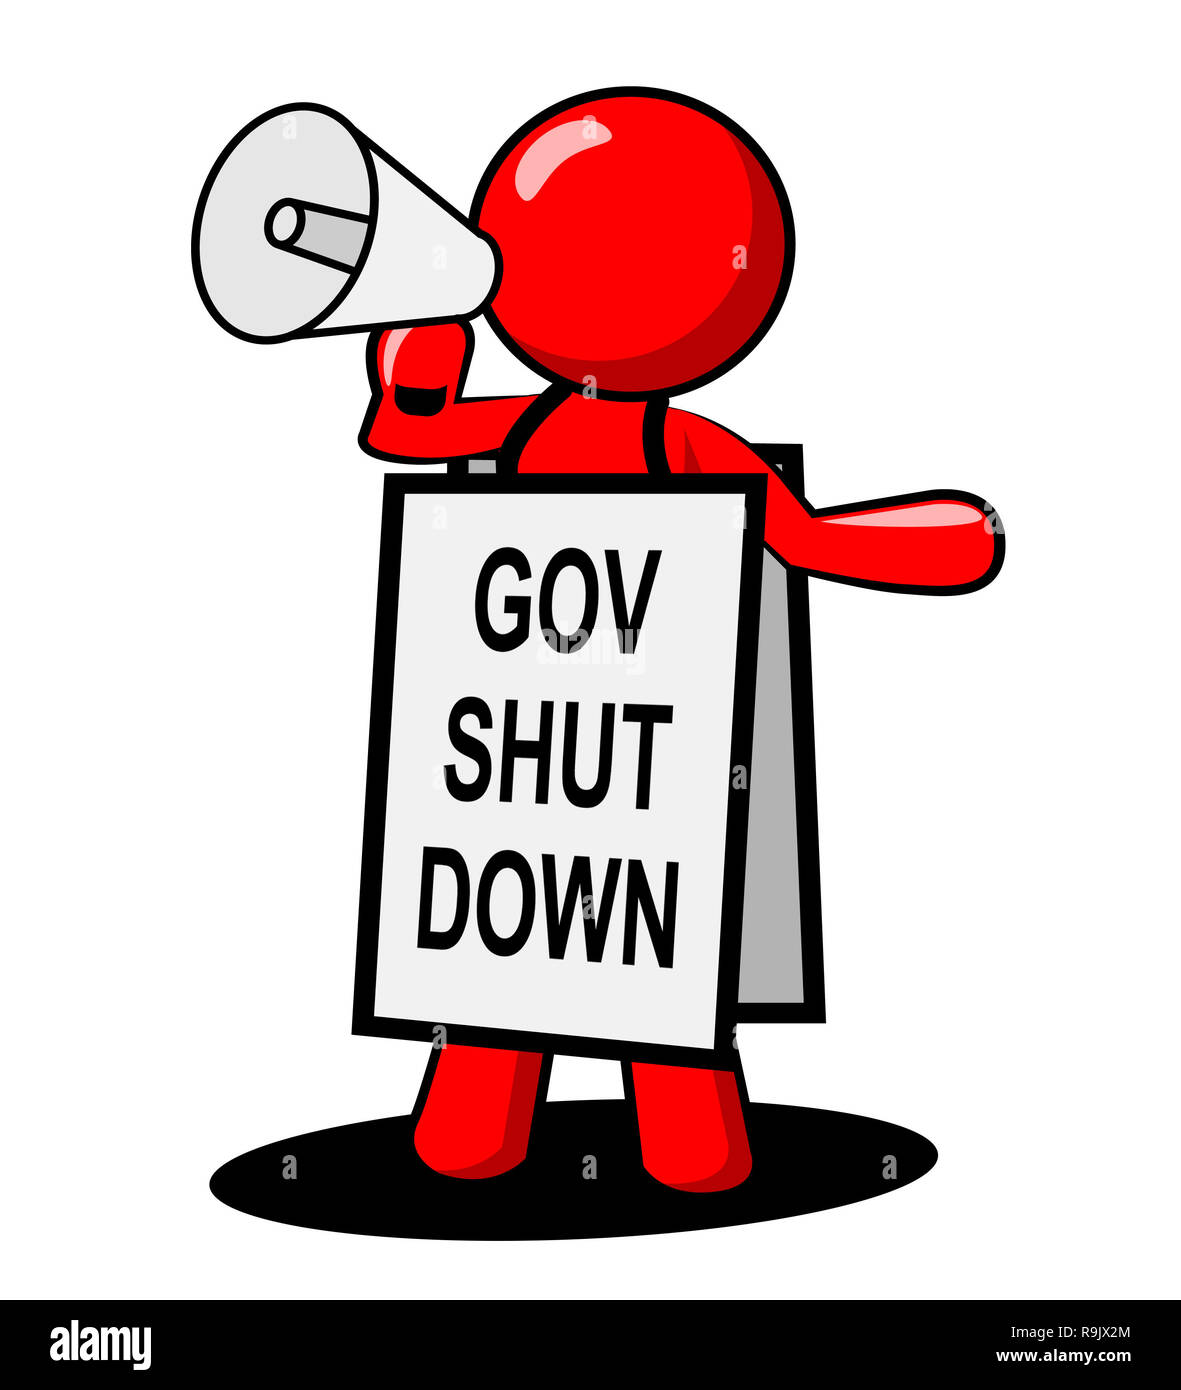 Government Shut Down Man Means United States Political Closure. President And Senators Cause Shutdown Across The Nation Stock Photo